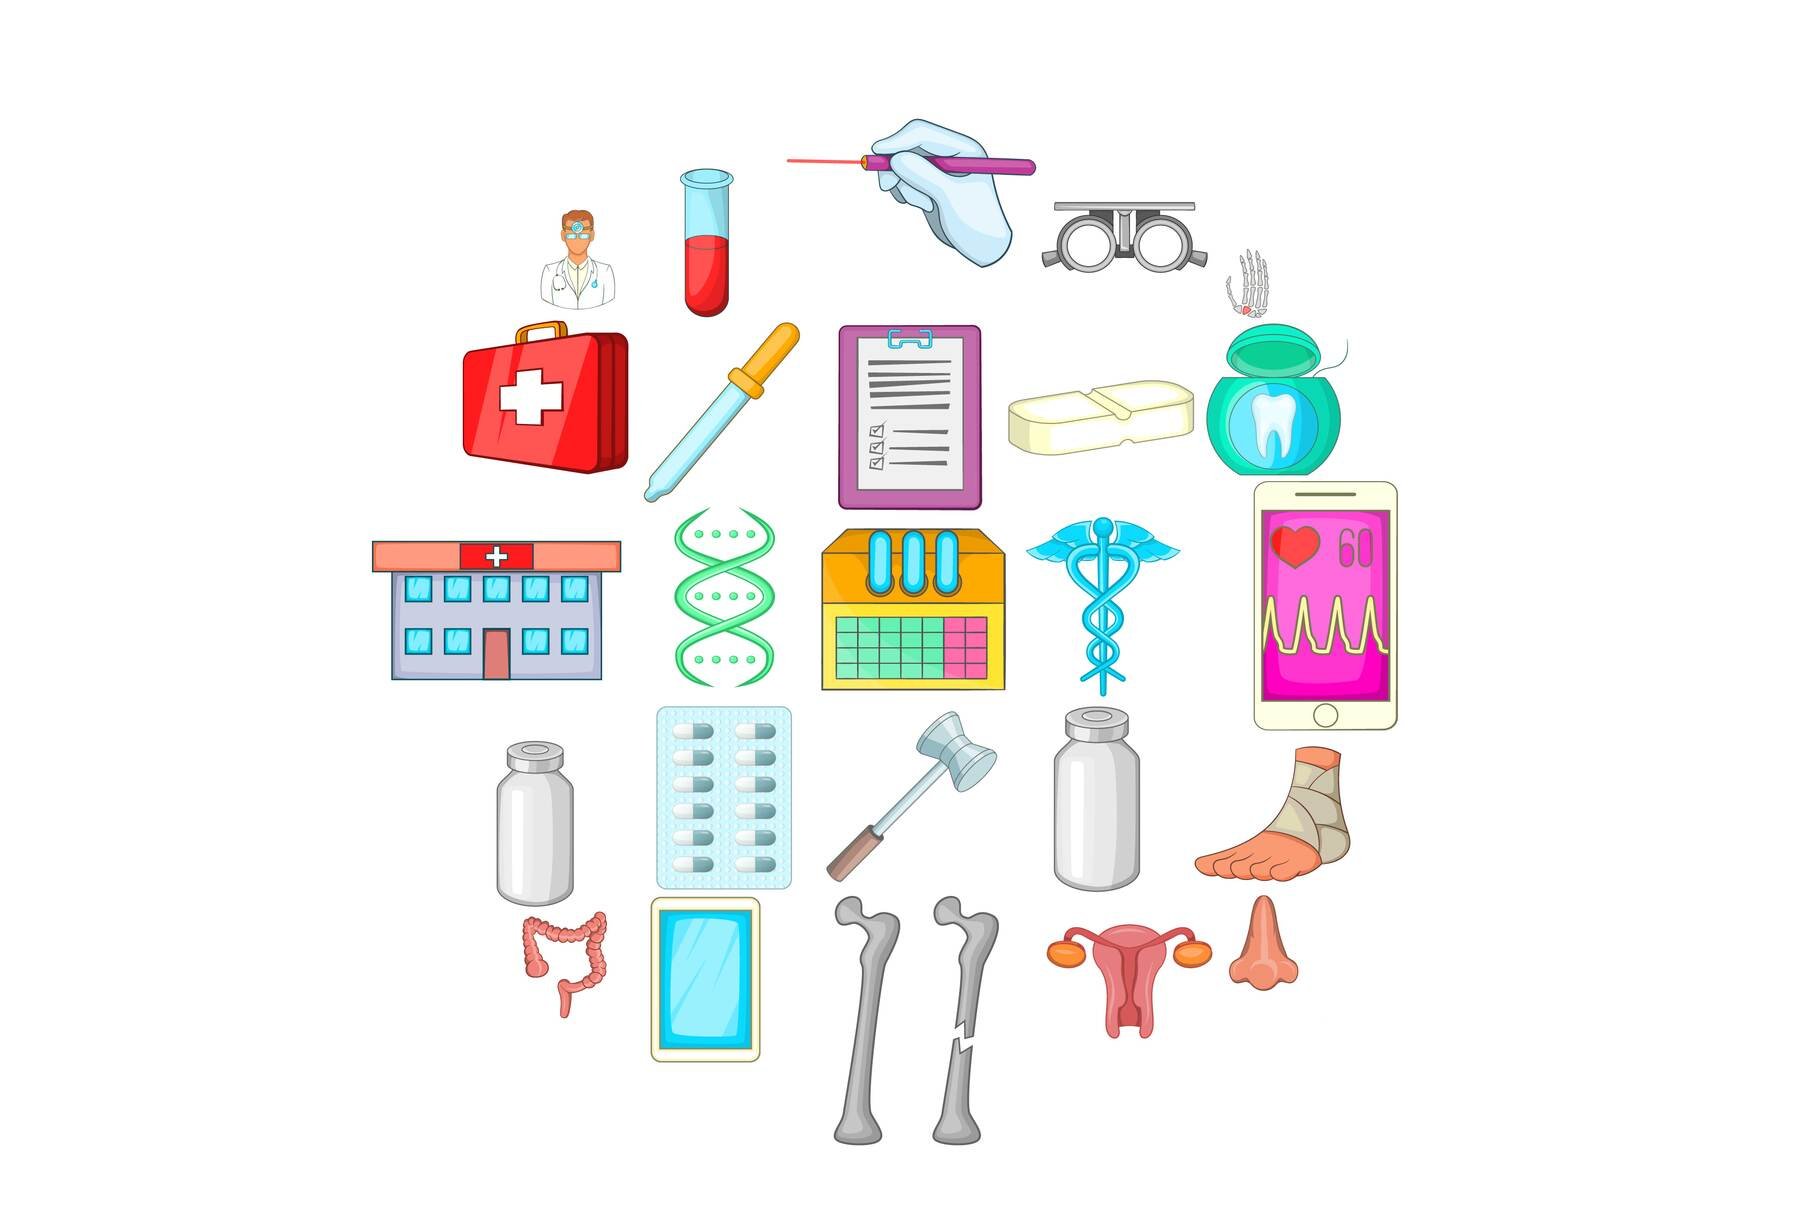 Hospital icons set, cartoon style cover image.